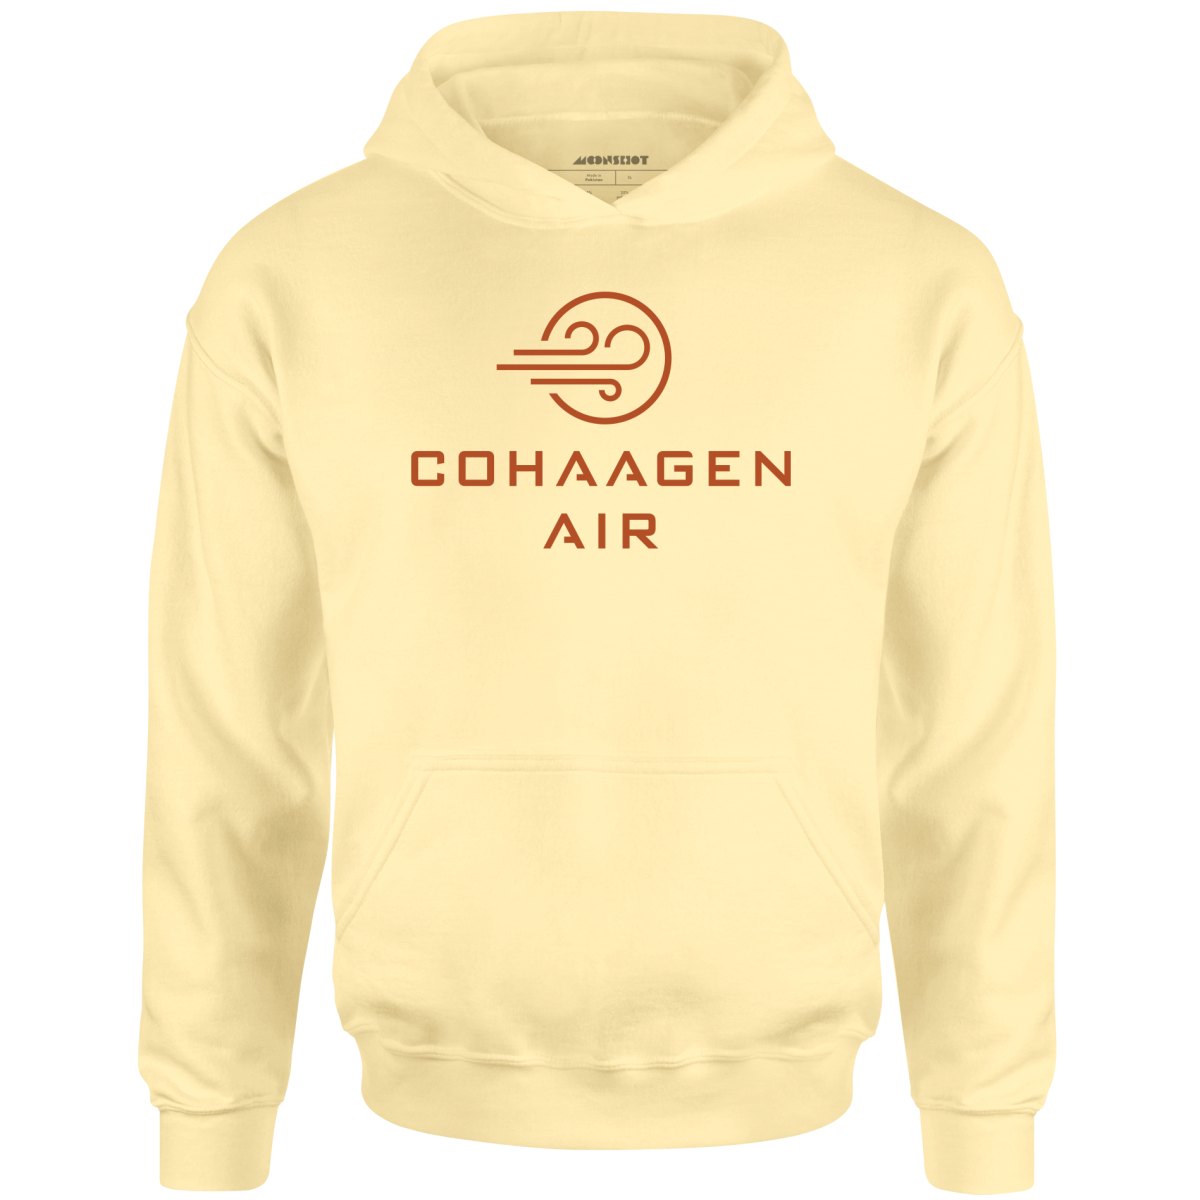 Cohaagen Air - Total Recall - Unisex Hoodie